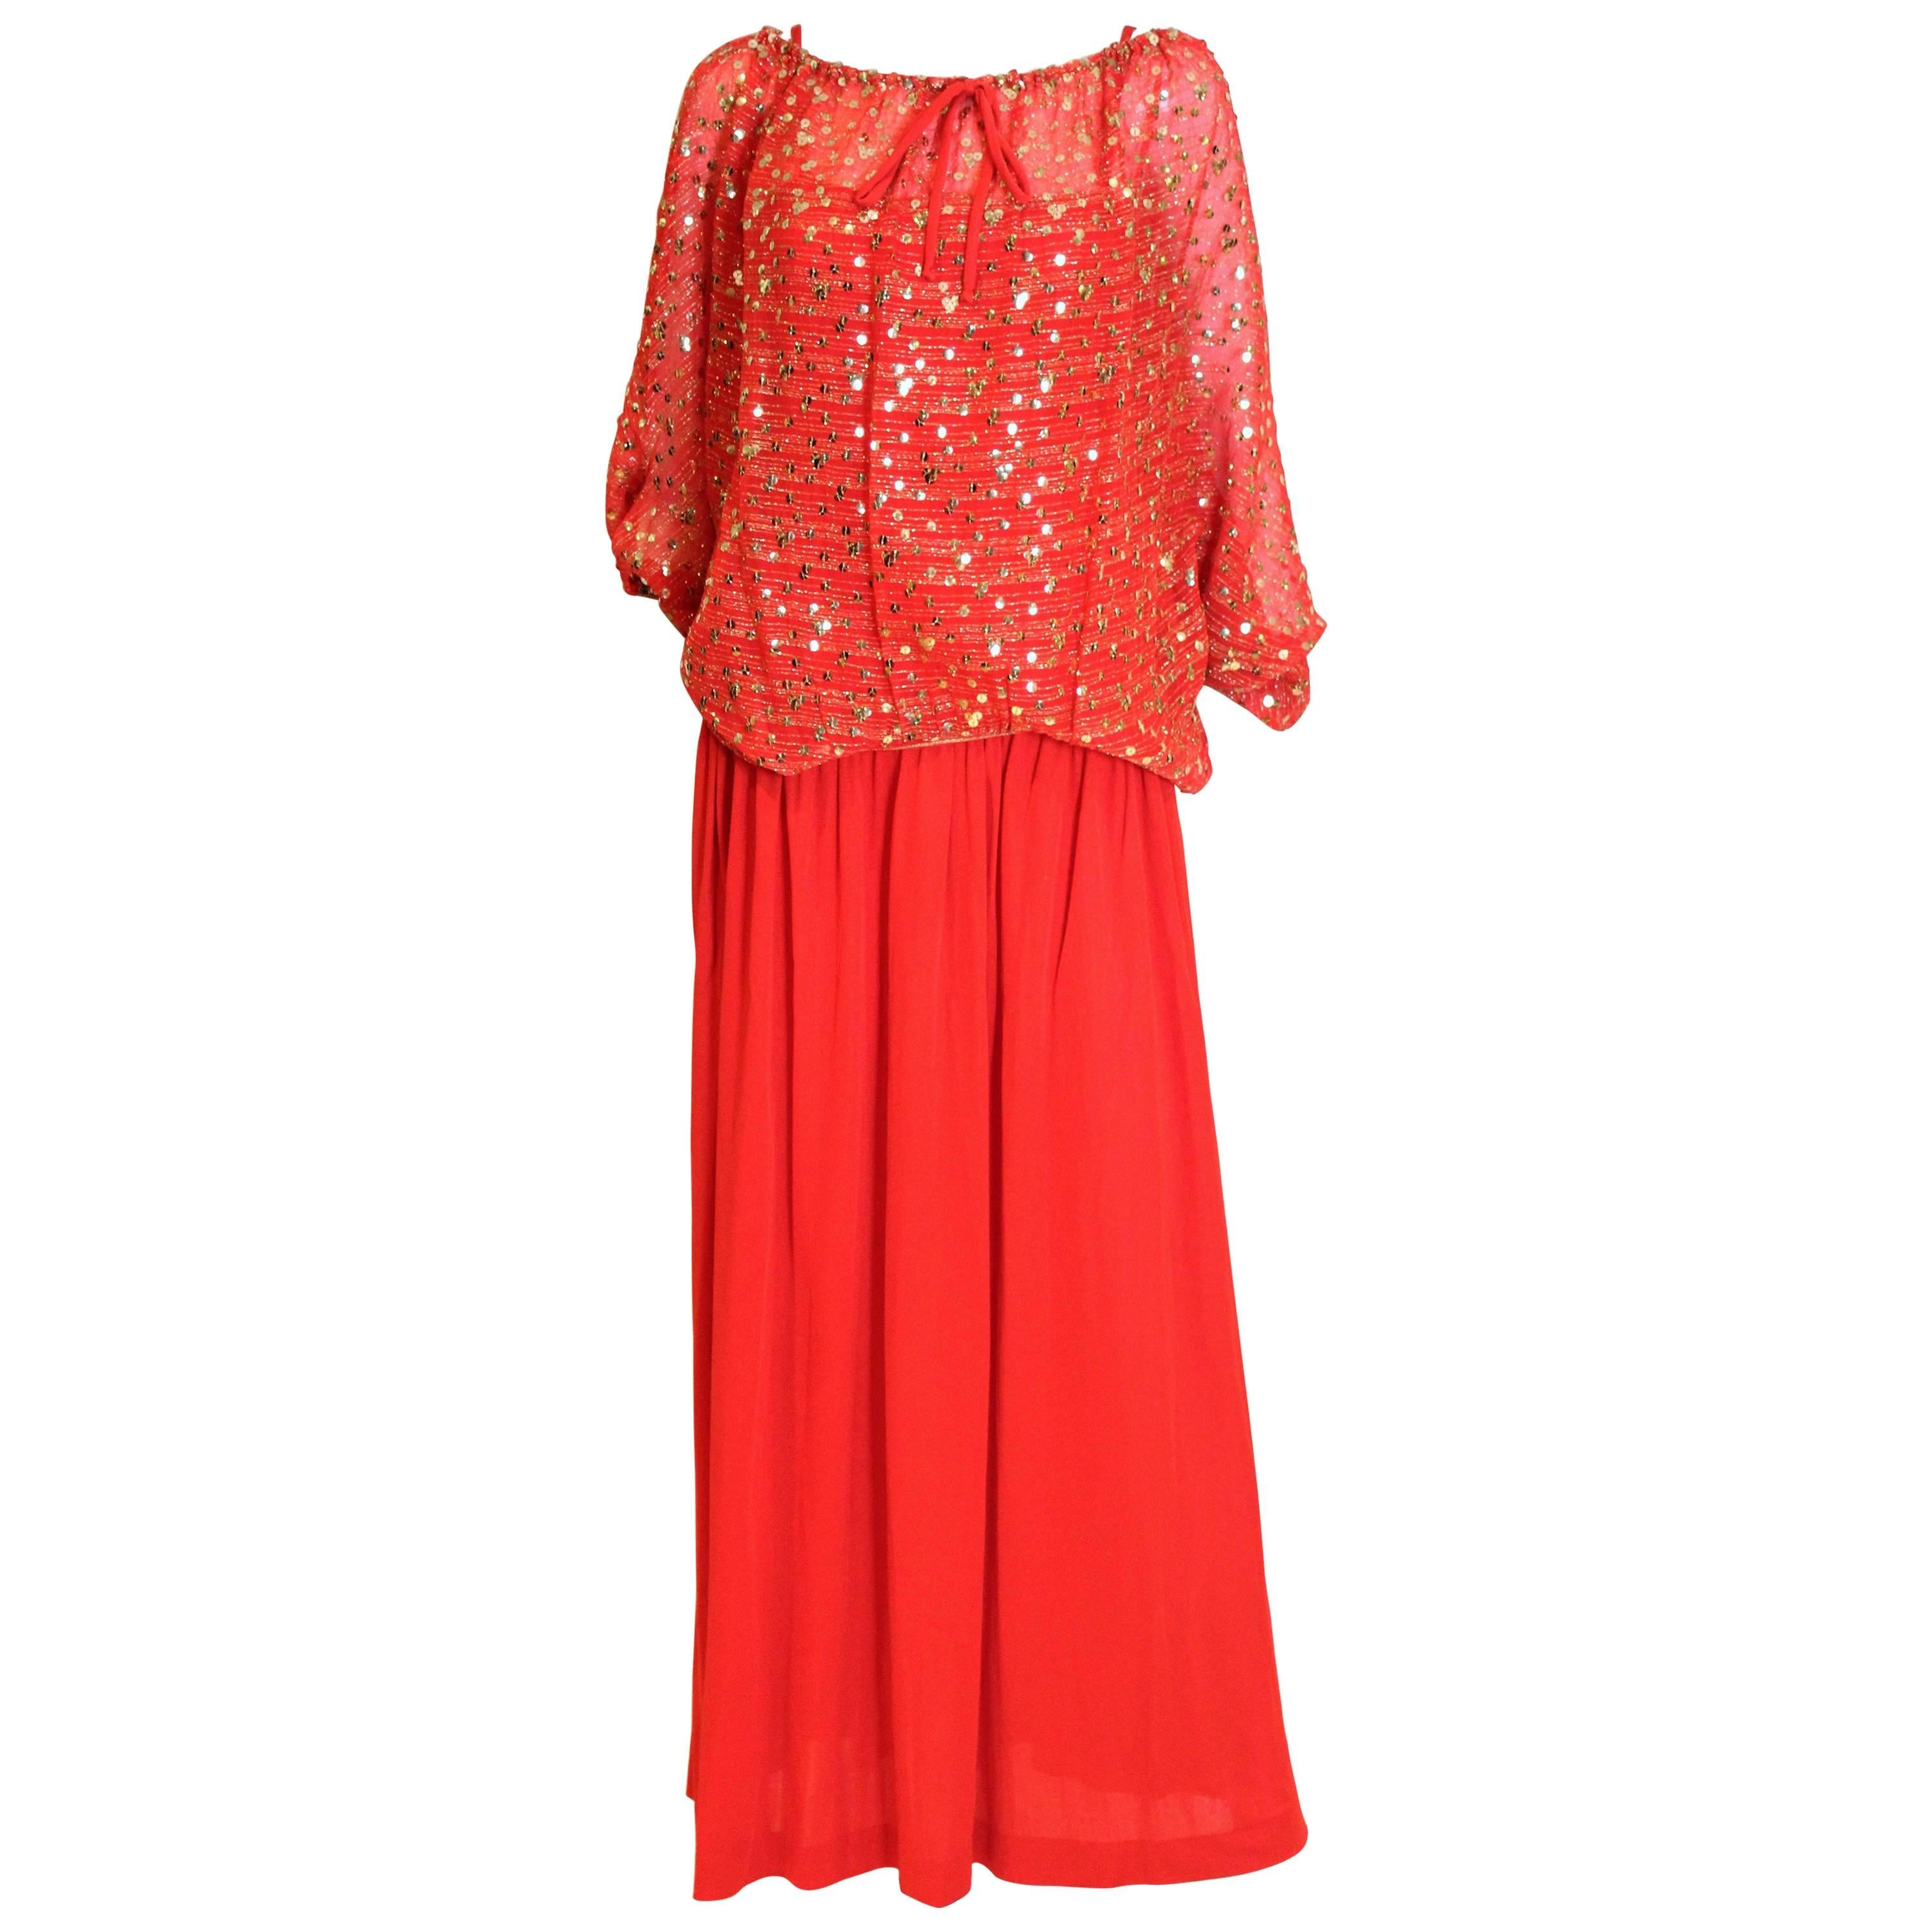 Christian Dior Red Boutique Paris Dress and Evening Top